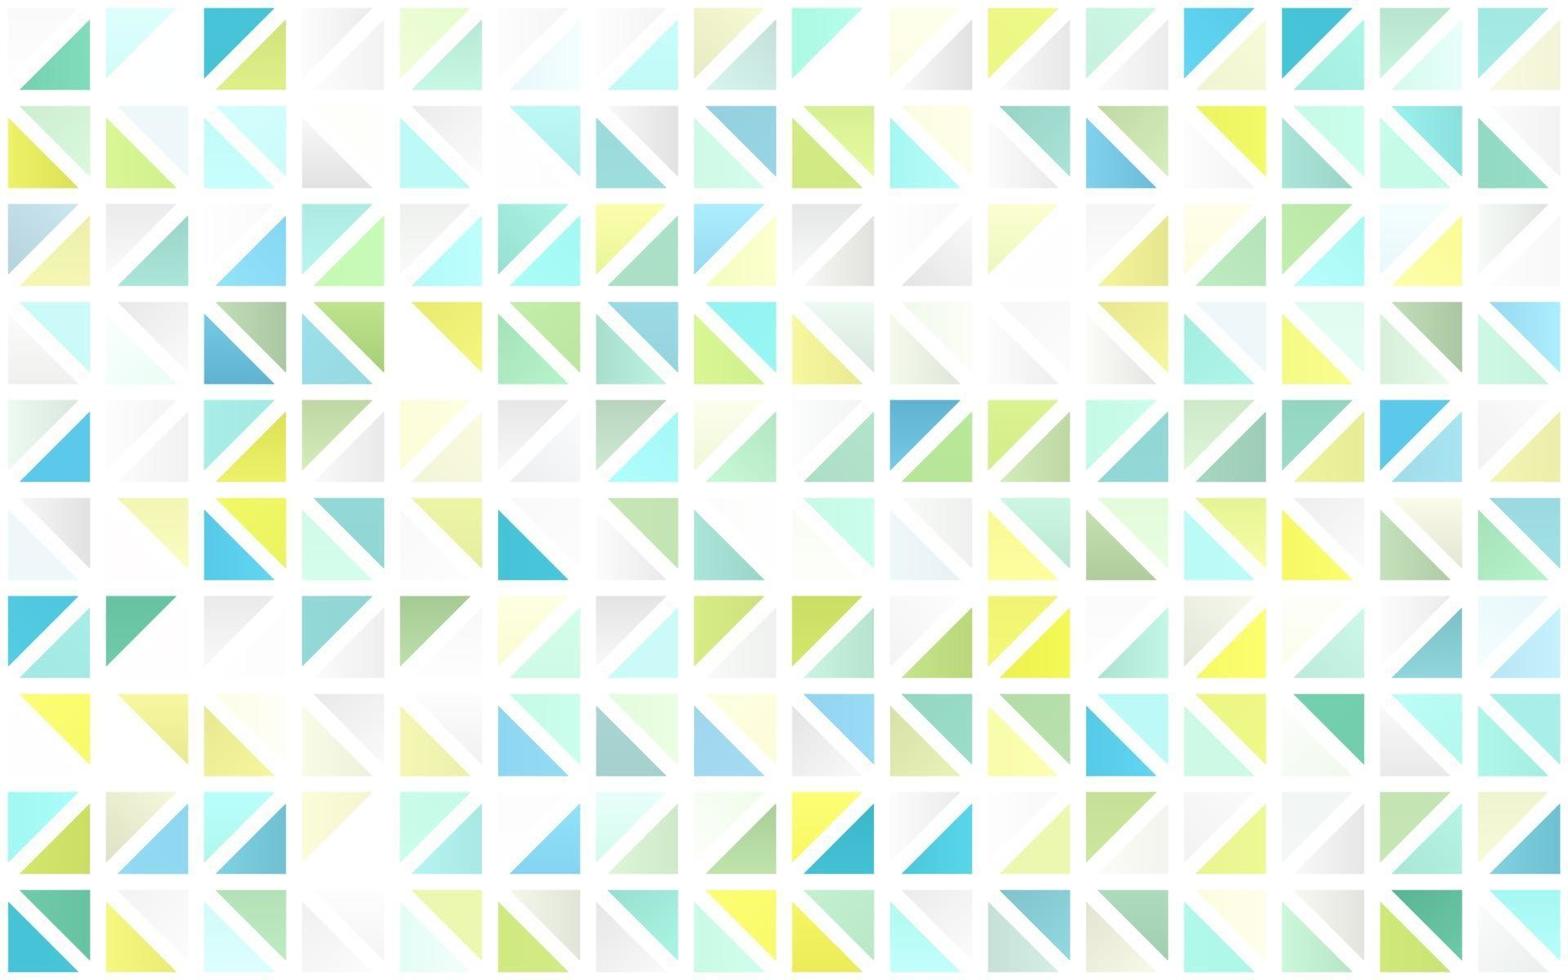 ljusgrön, gul vektor sömlösa mönster i polygonal stil.